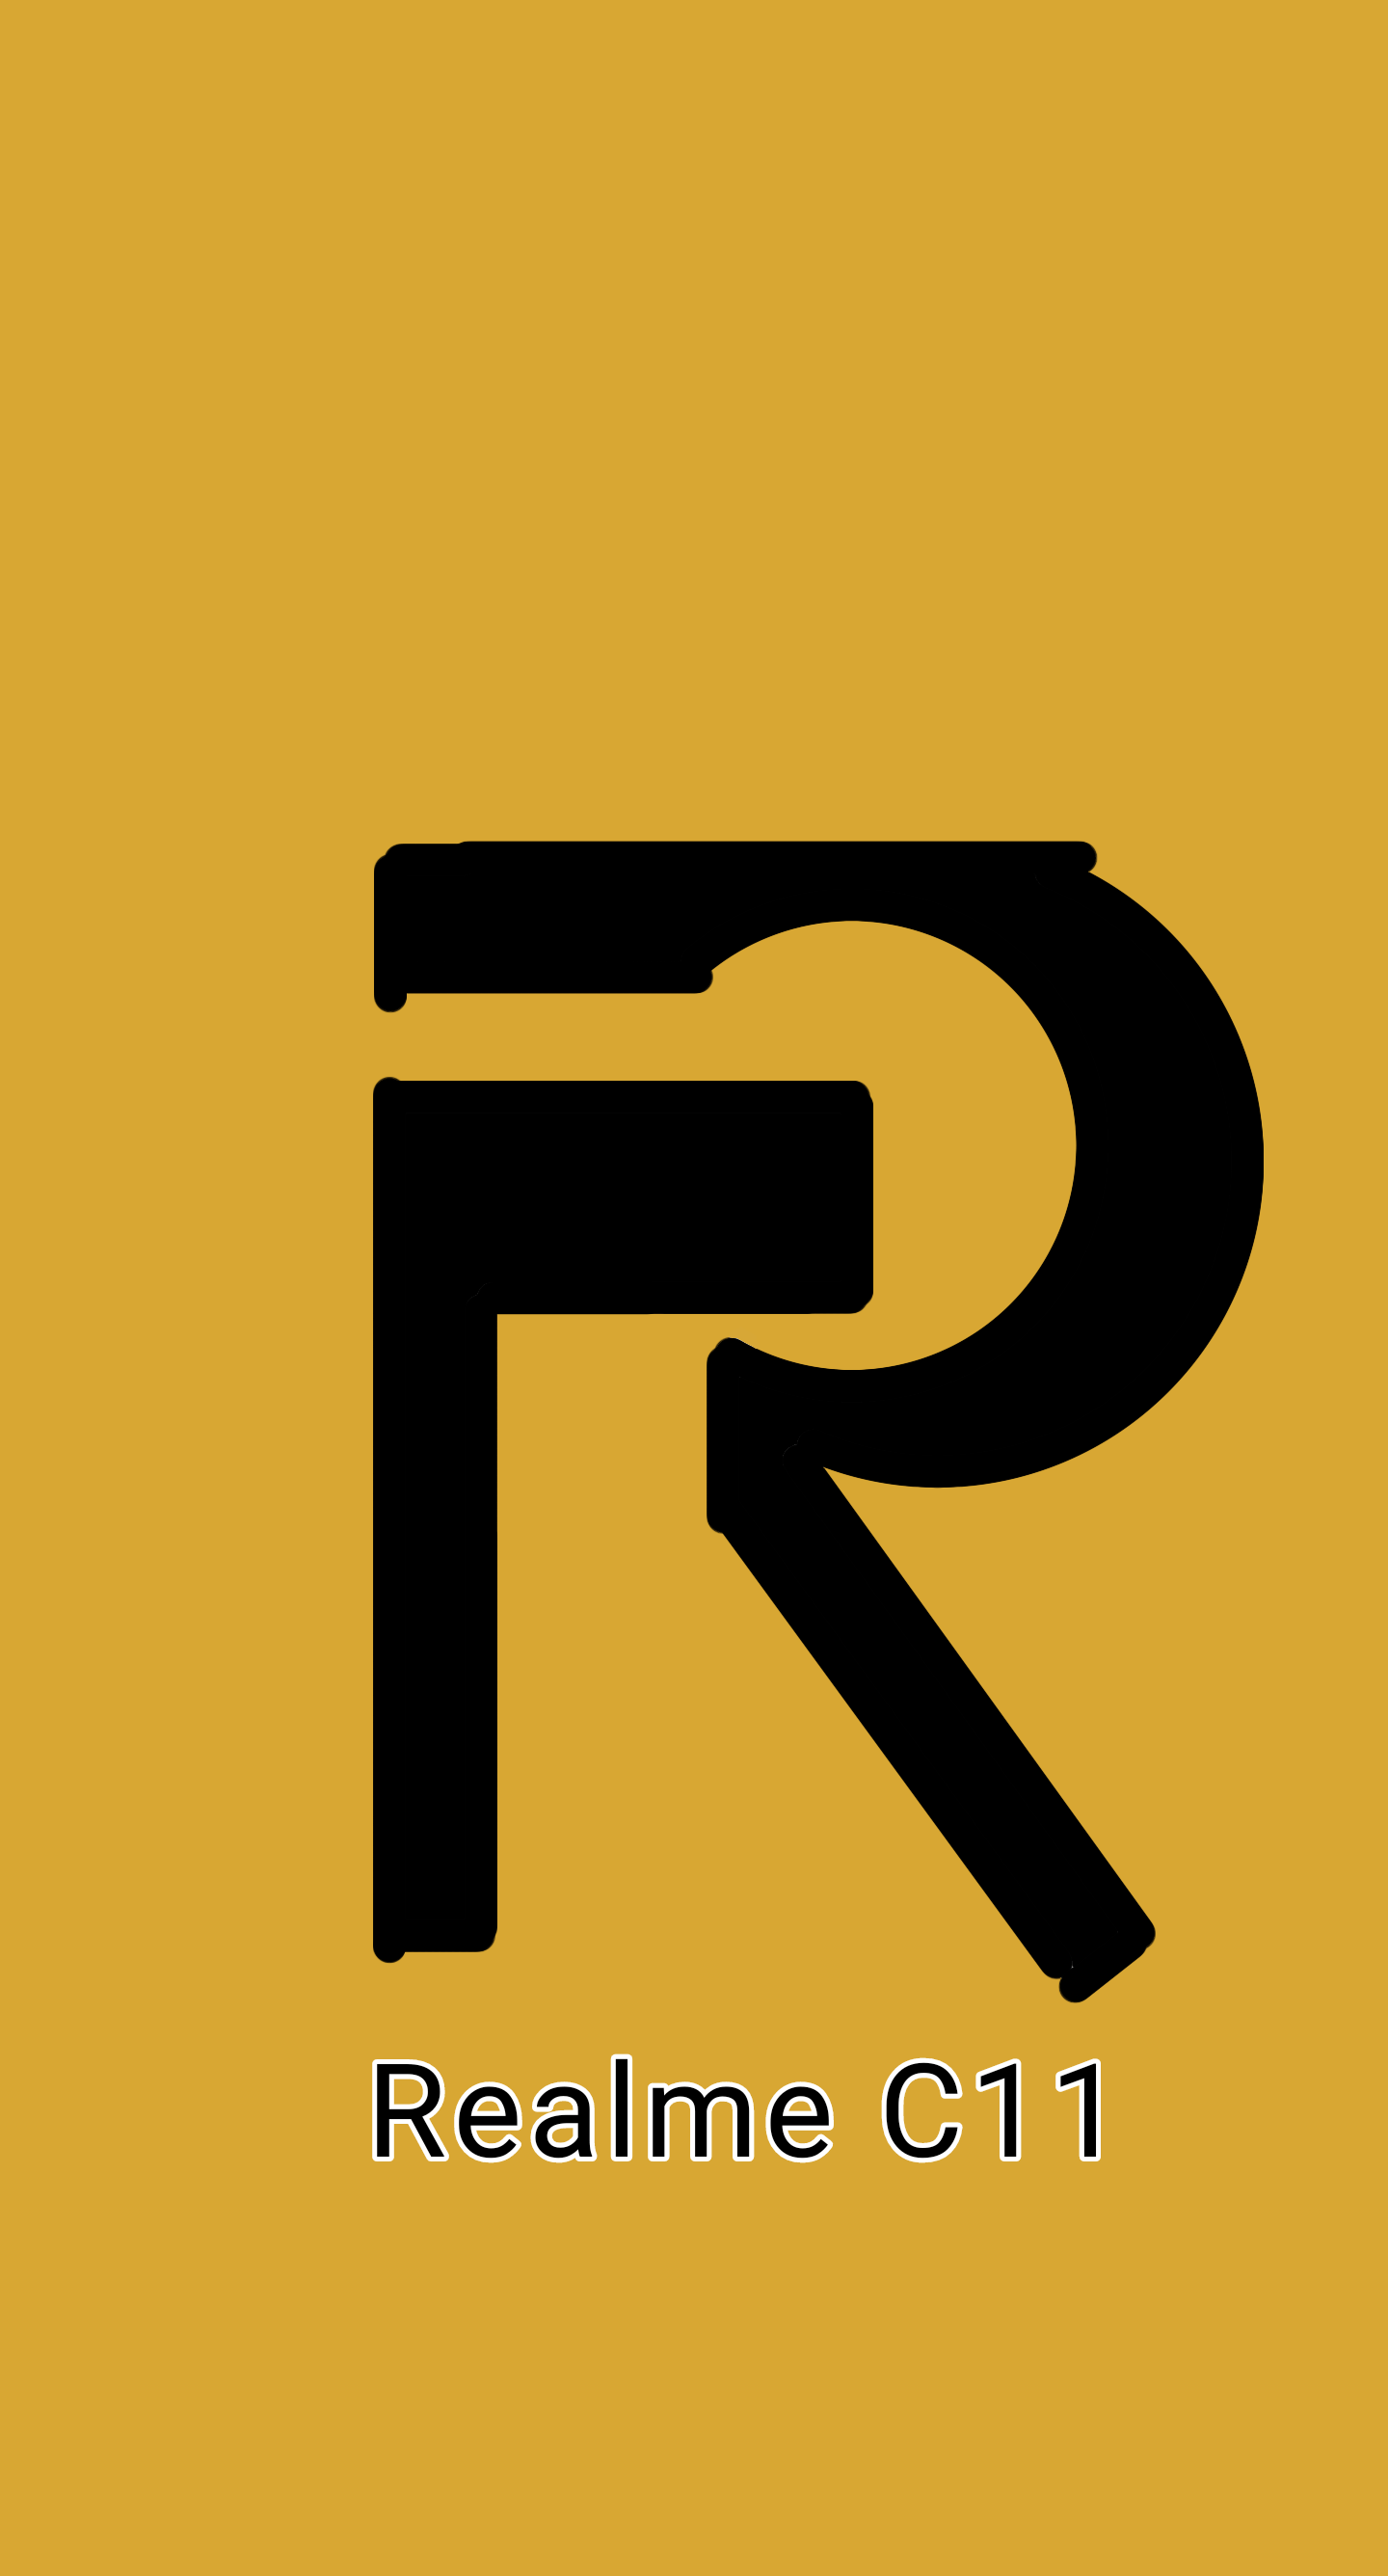 Realme Logo Wallpapers - Wallpaper Cave